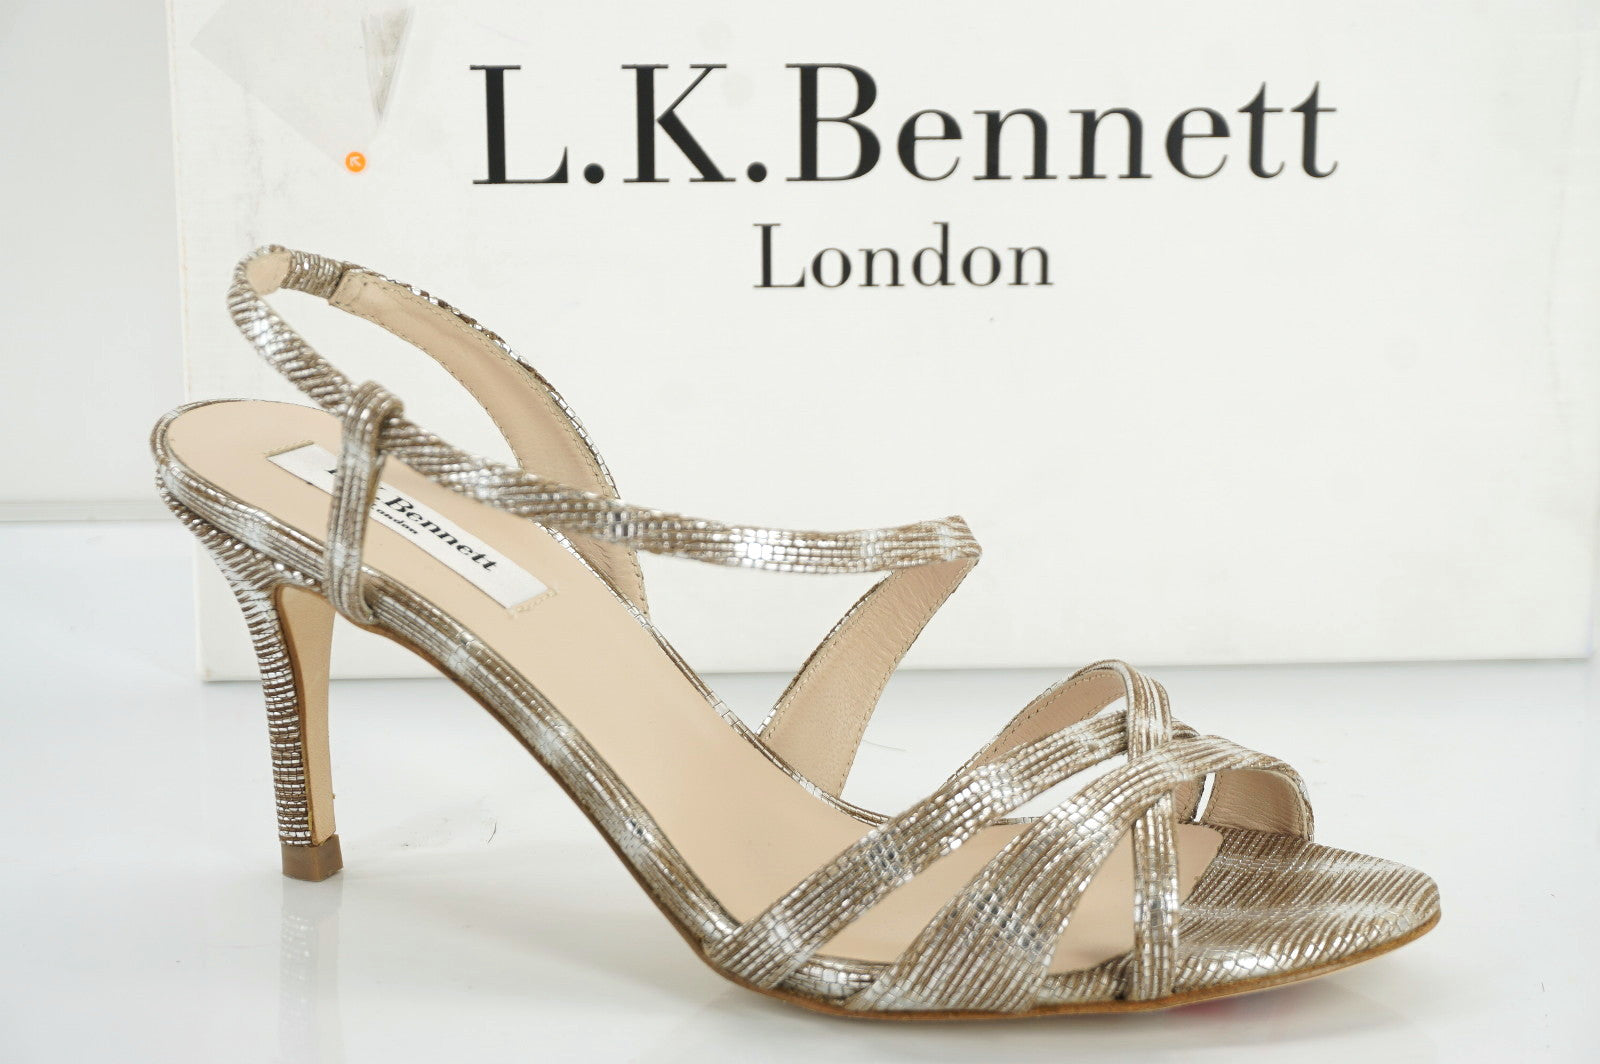 L.K. Bennett Lourdes Metallic Leather Sandals SZ 37 Silver Lizzard New $345